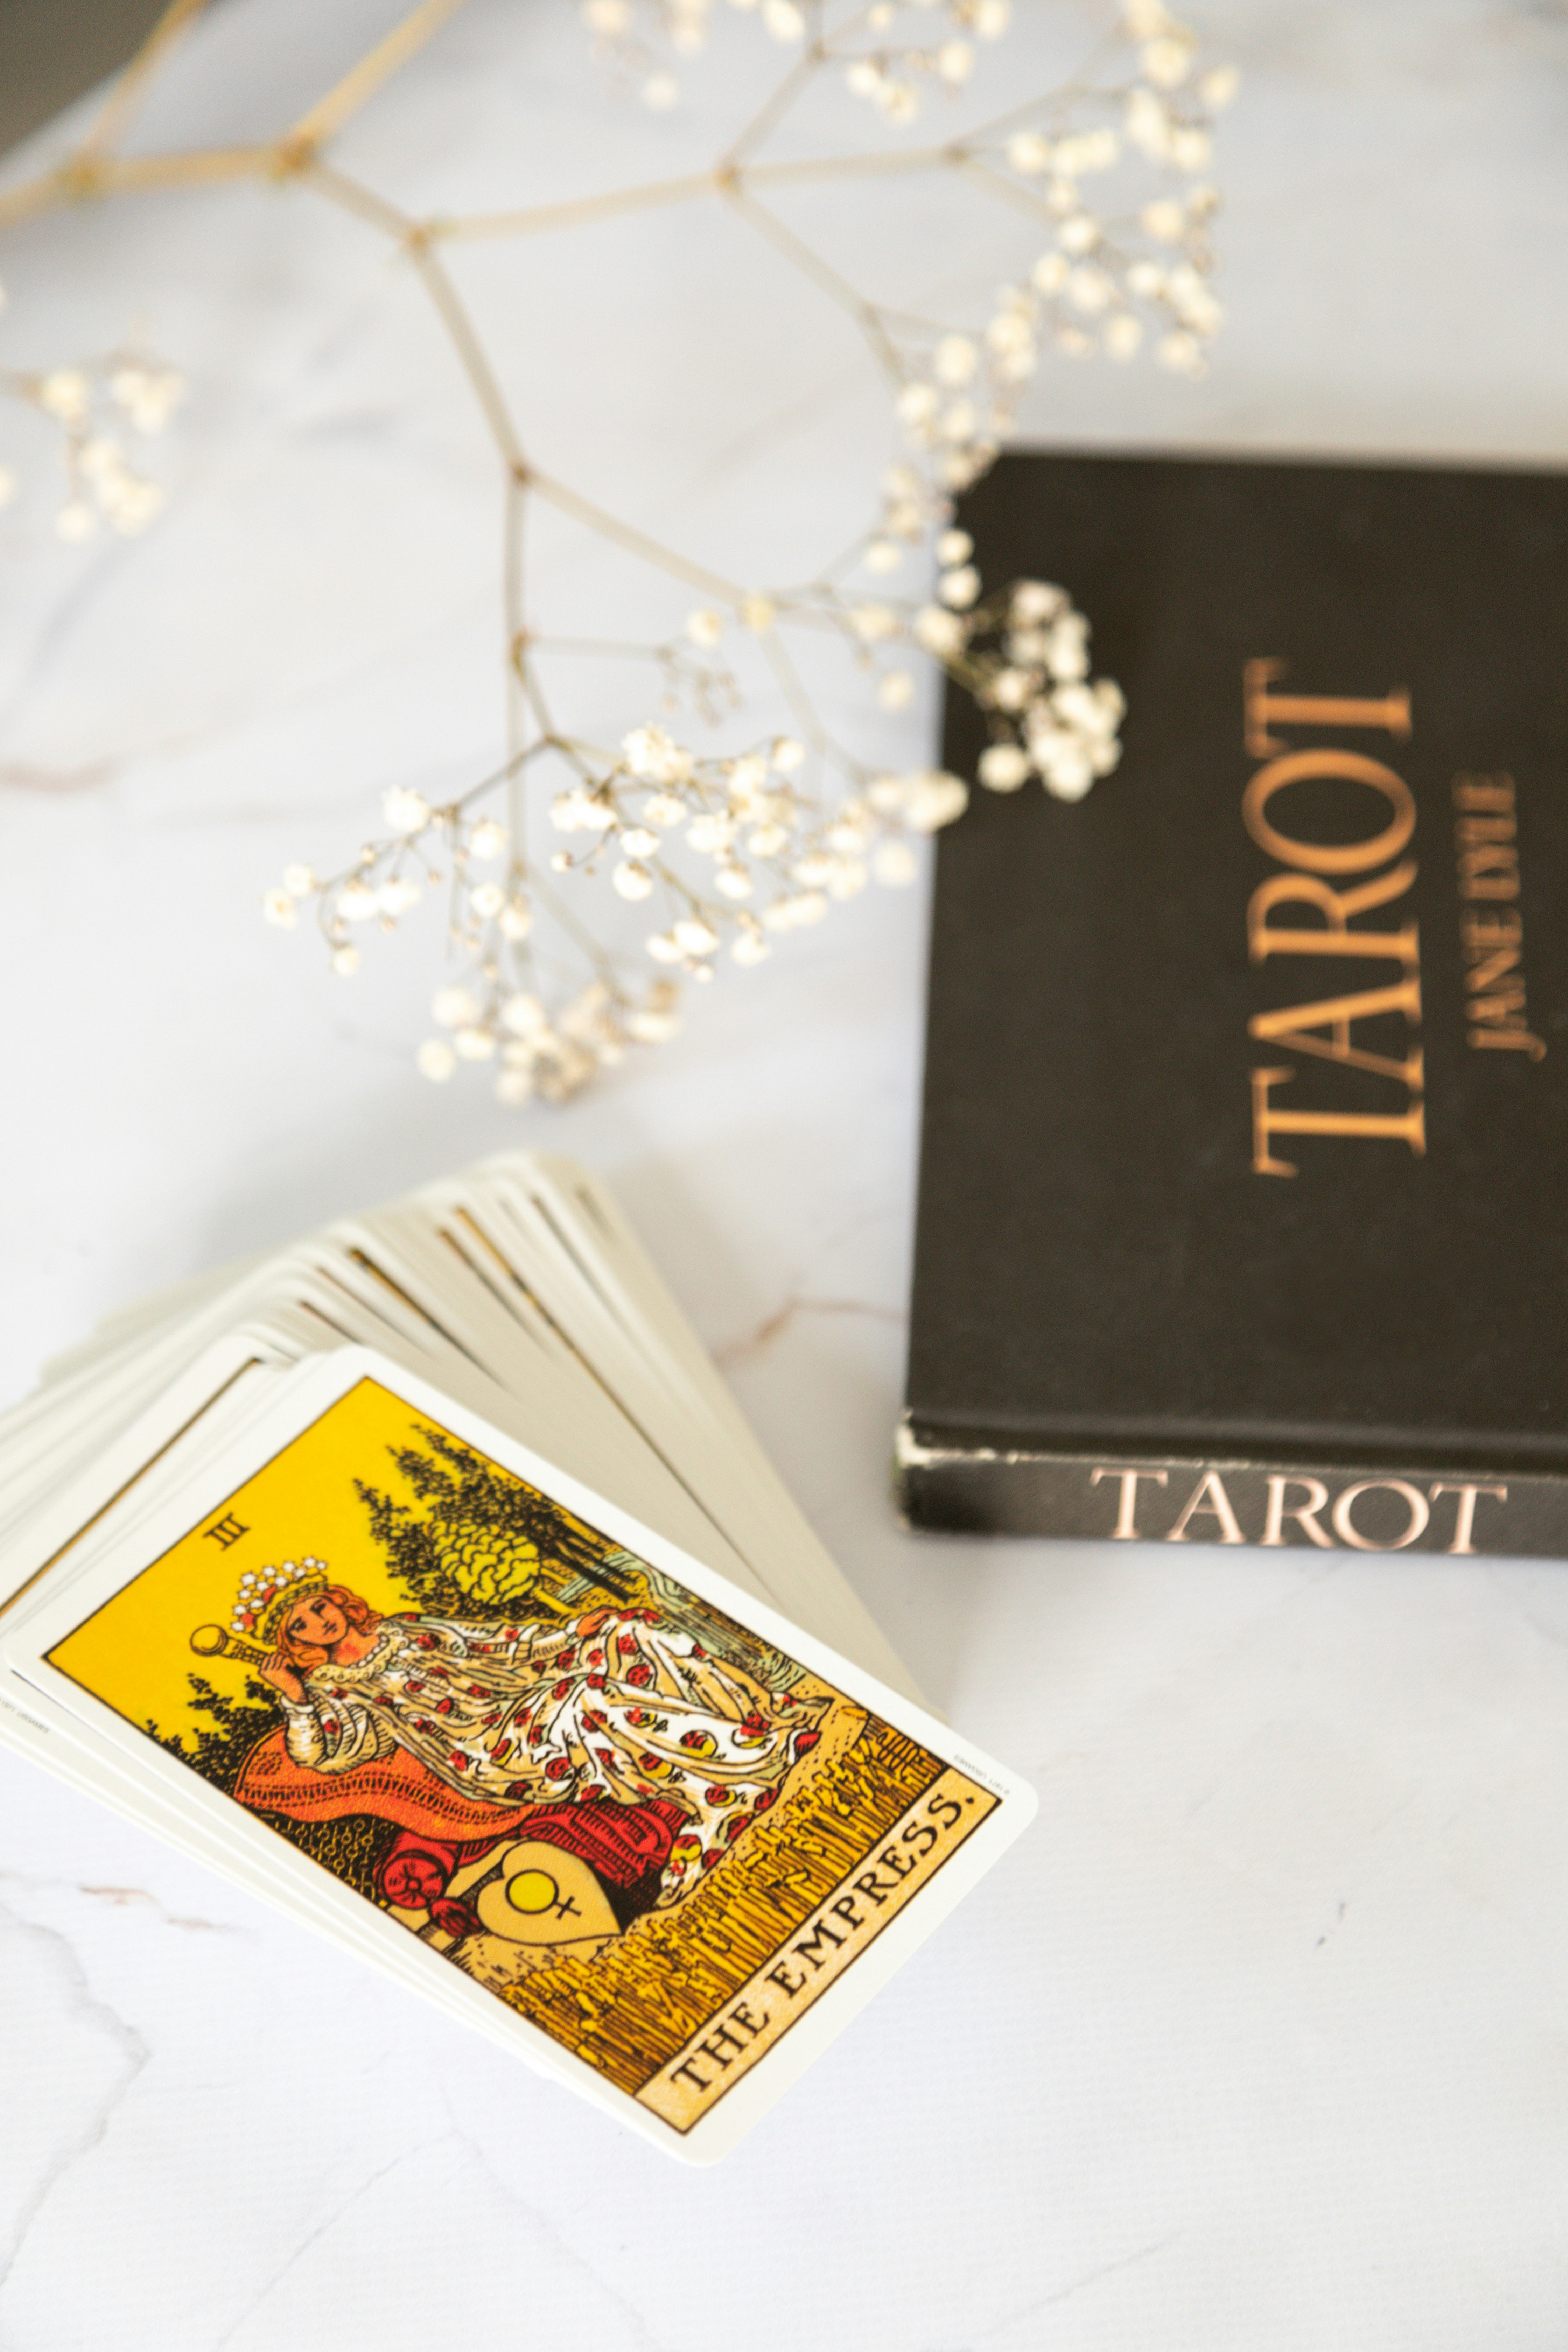 Tarot book with The Empress card from the Rider Waite Tarot deck